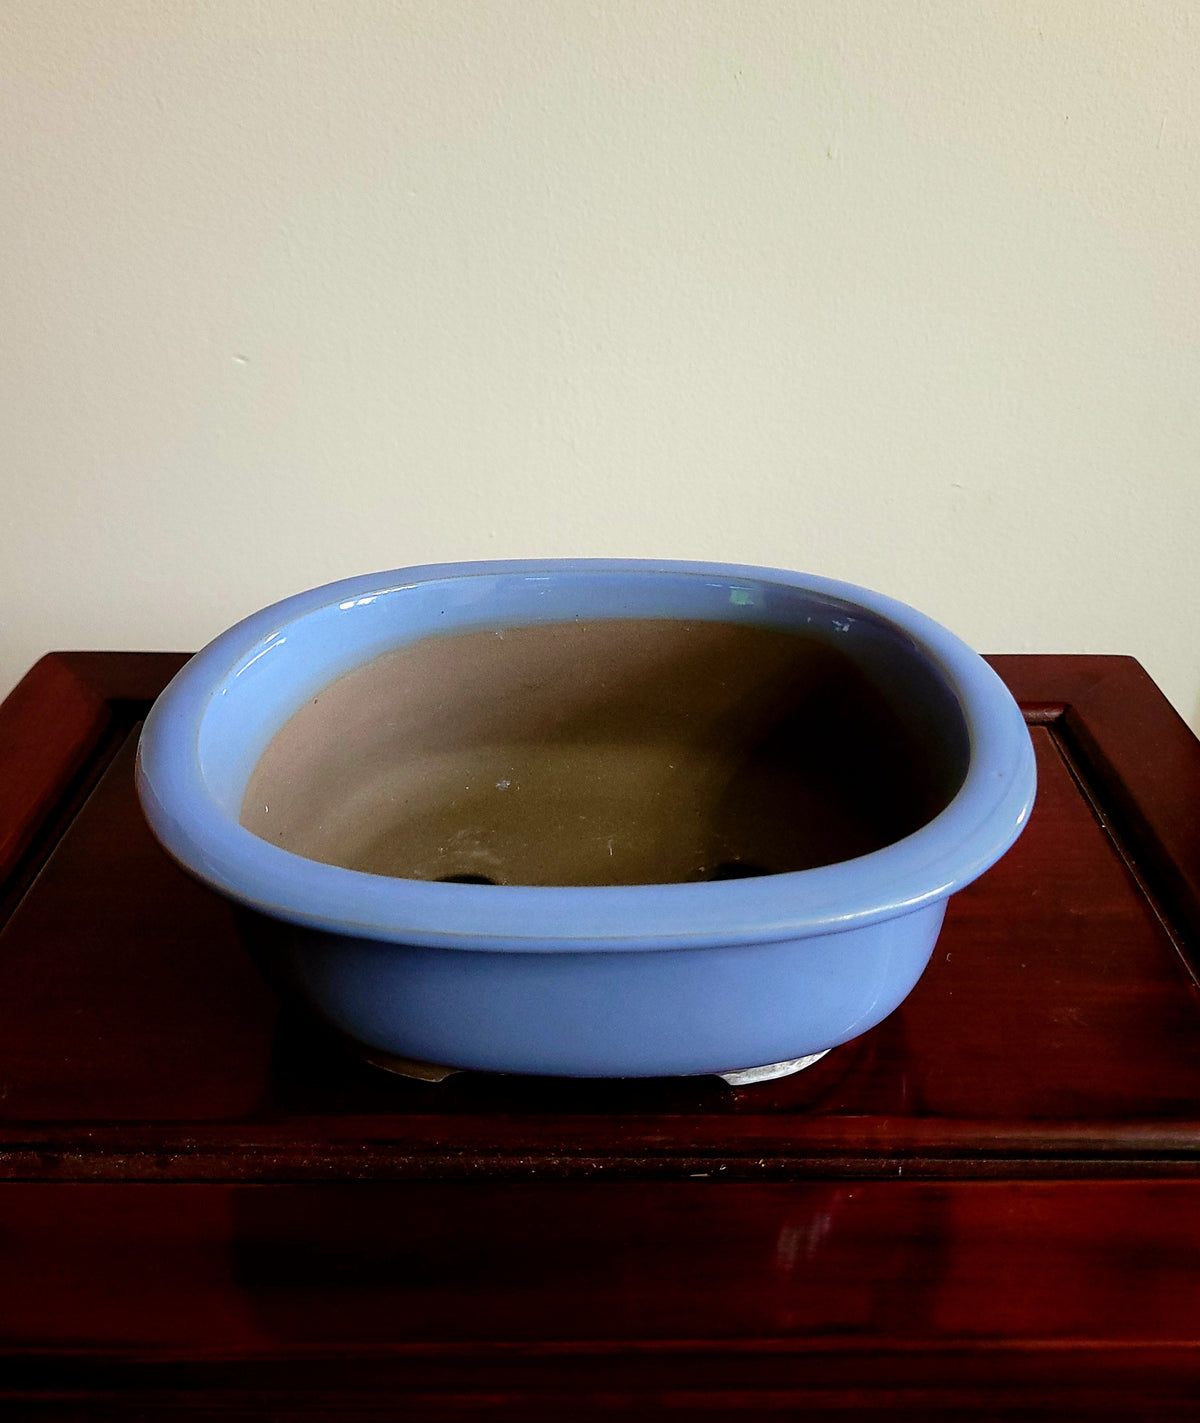 7" Japanese oval tub style bonsai pot with lip